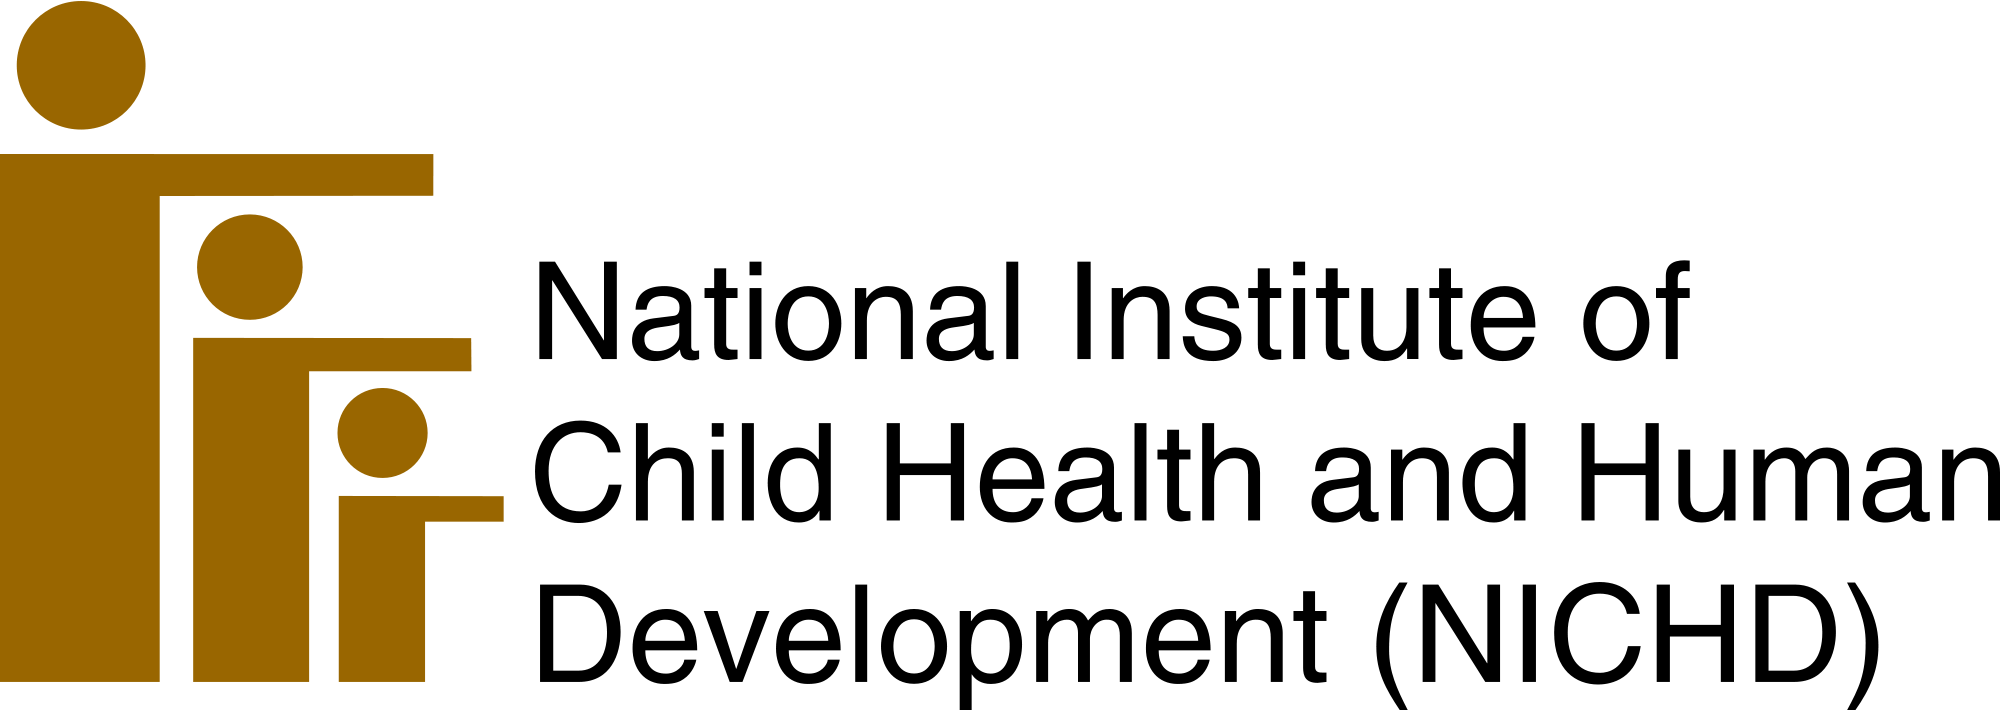 NICHD Logo - File:US-NIH-NICHD-Logo.svg - Wikimedia Commons